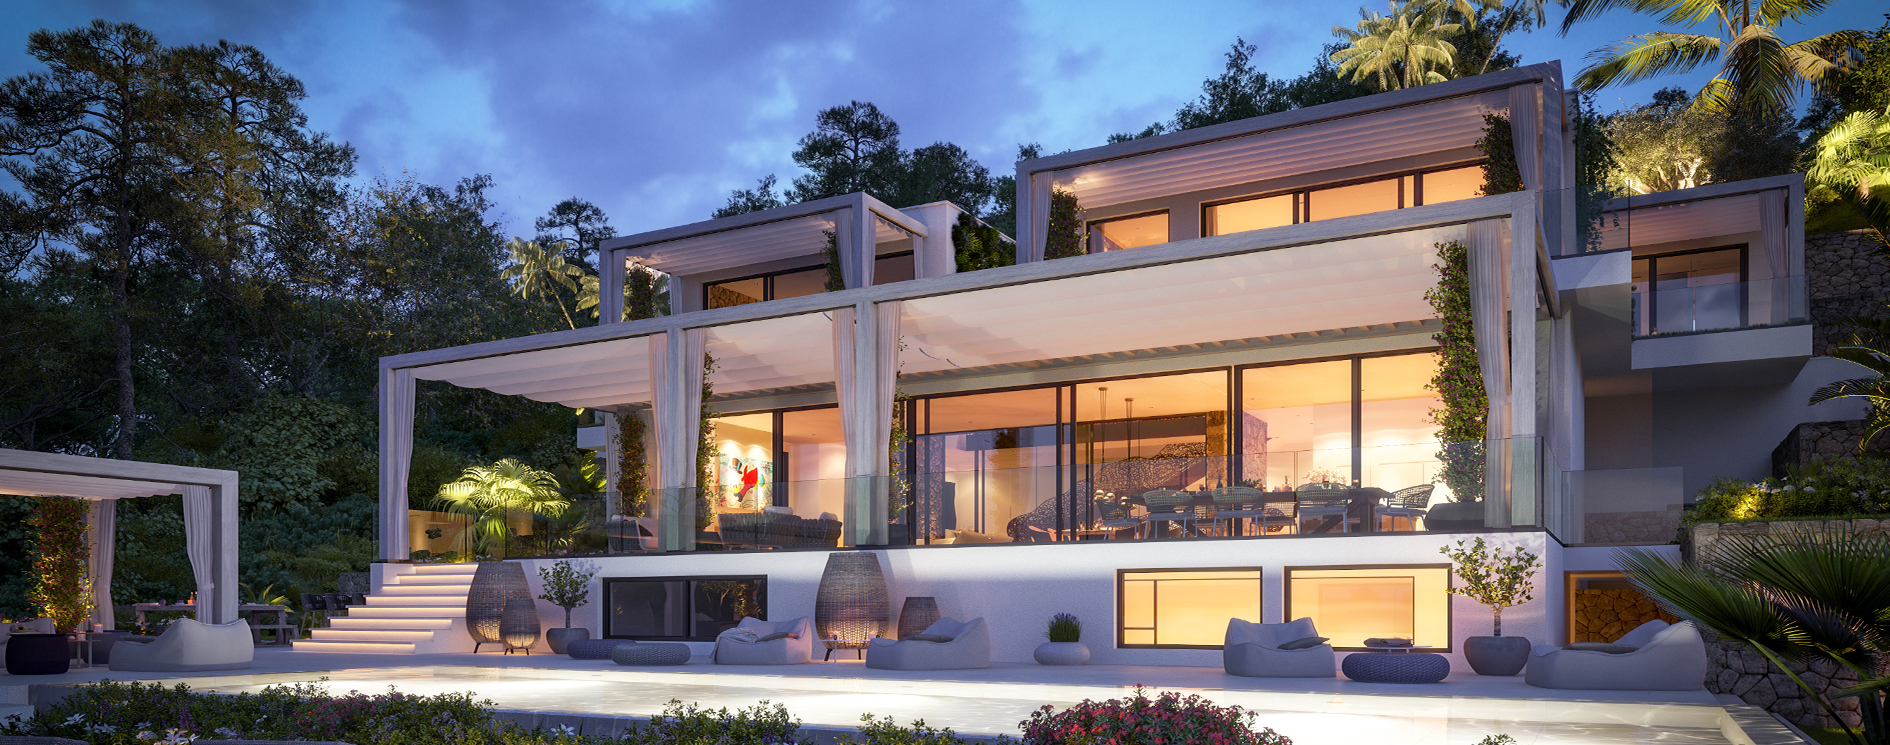 Completed: Luxury villa HORIZON now on pre-sale